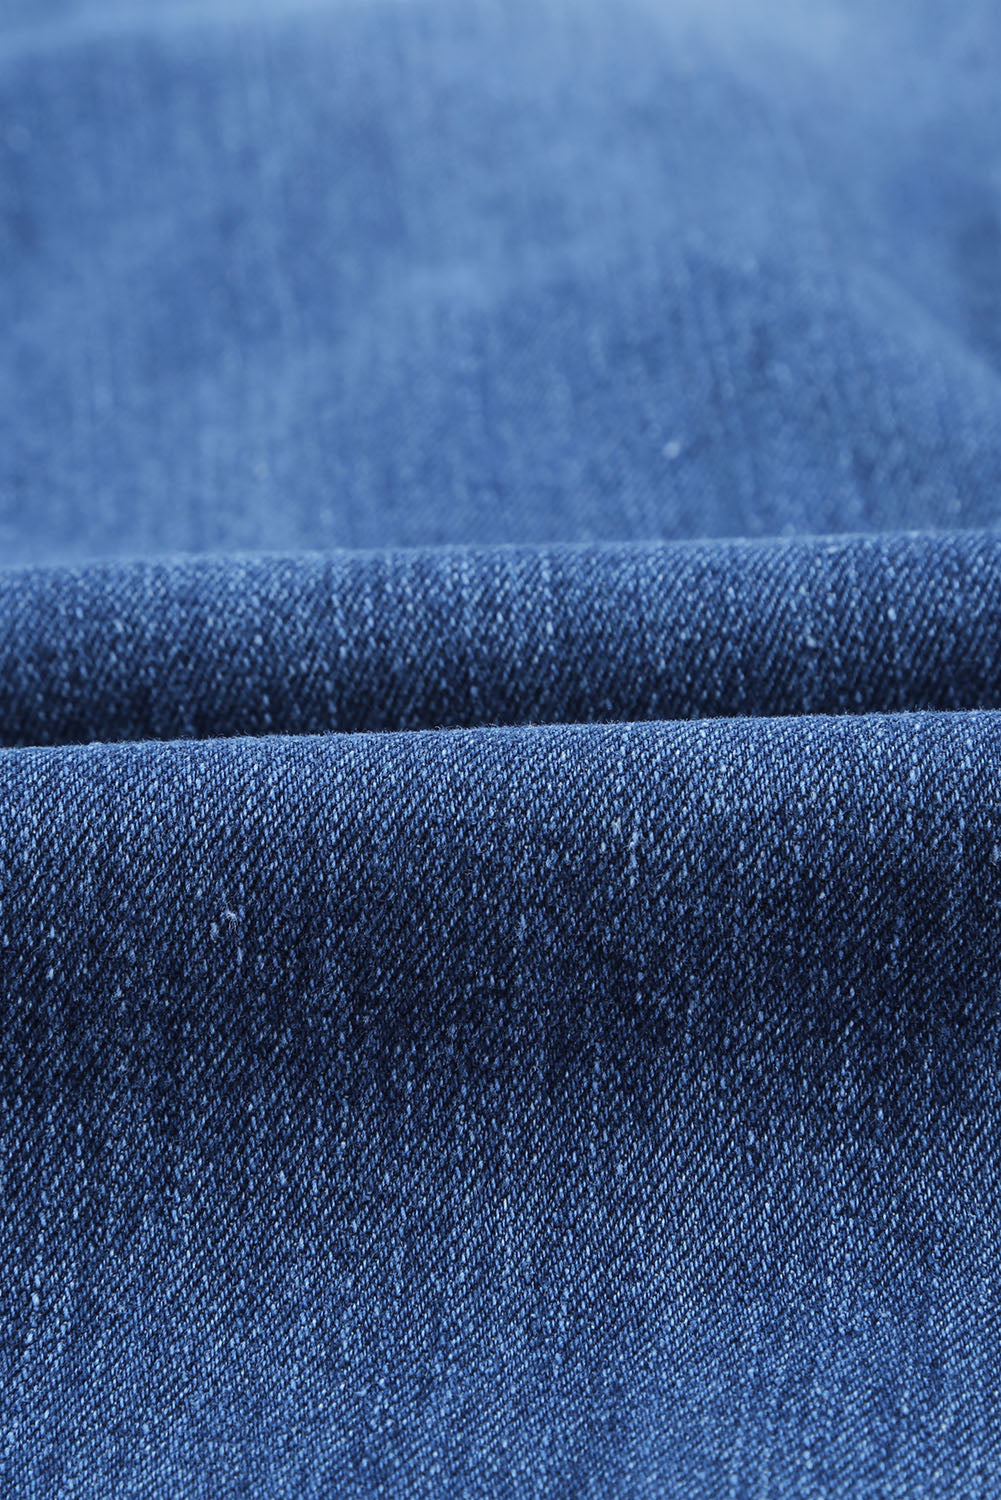 Blue High Waist Distressed Bell Jeans Jeans JT's Designer Fashion